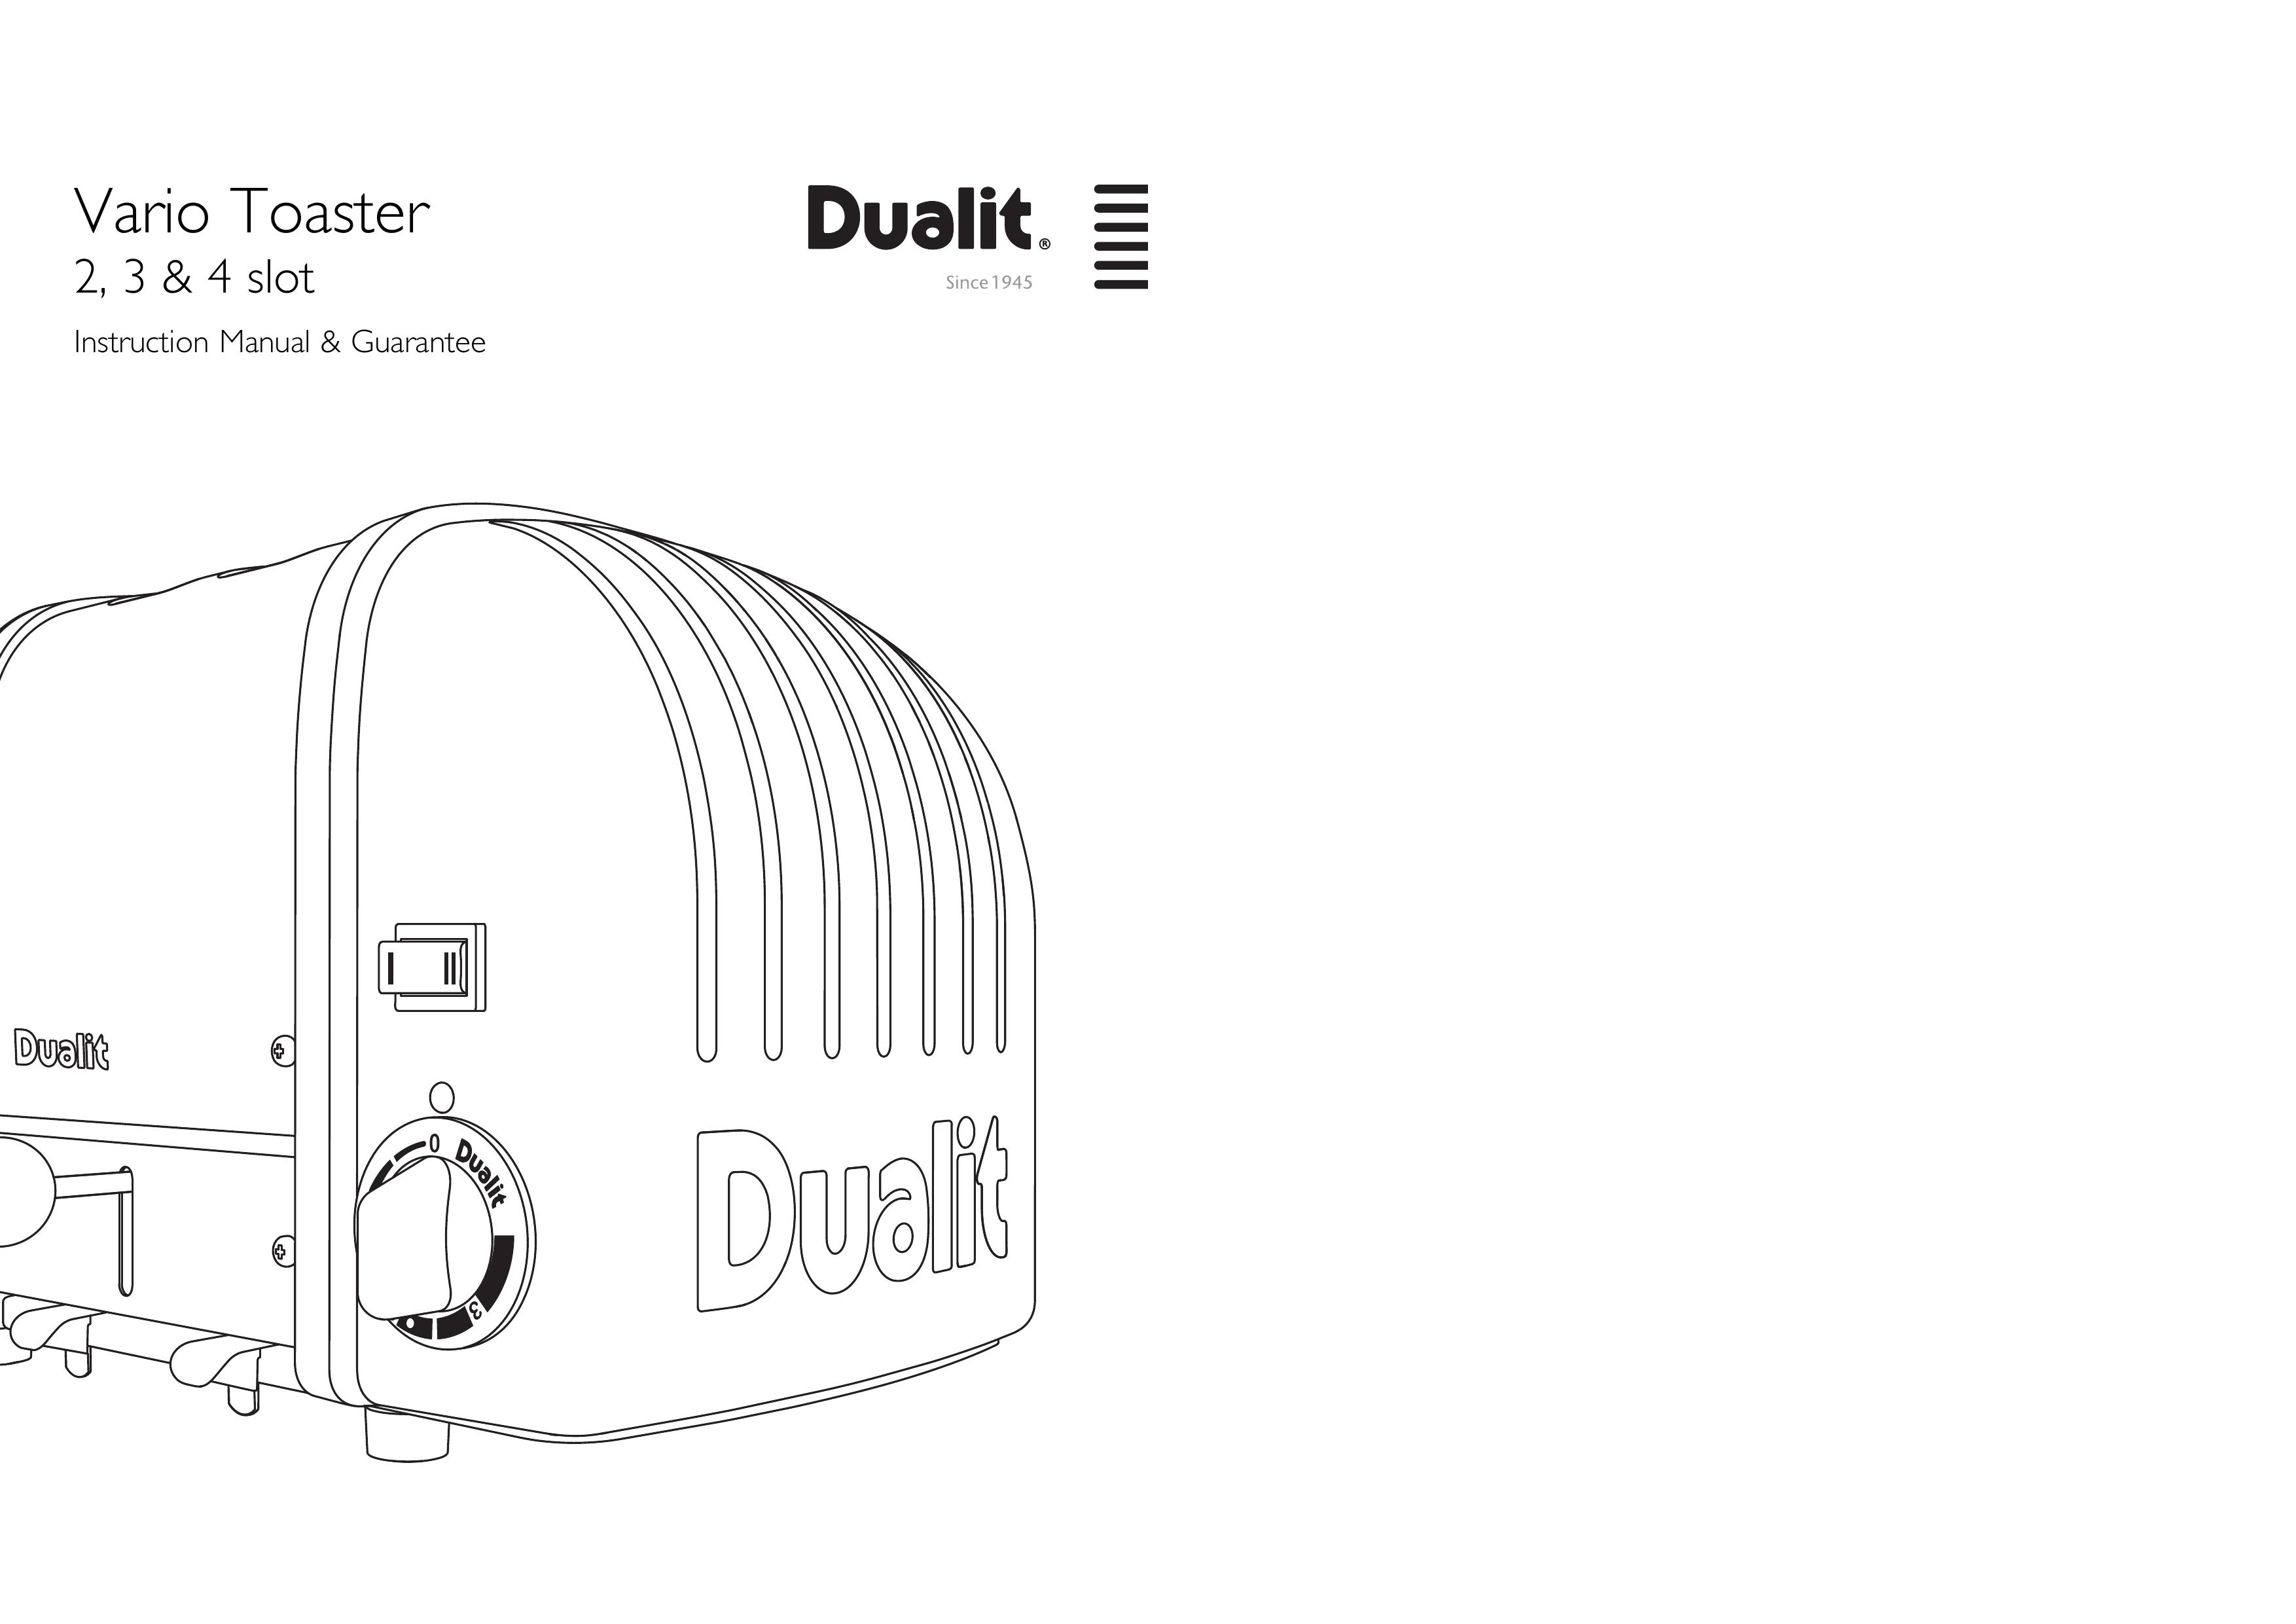 Dualit 2 SLOT Toaster User Manual